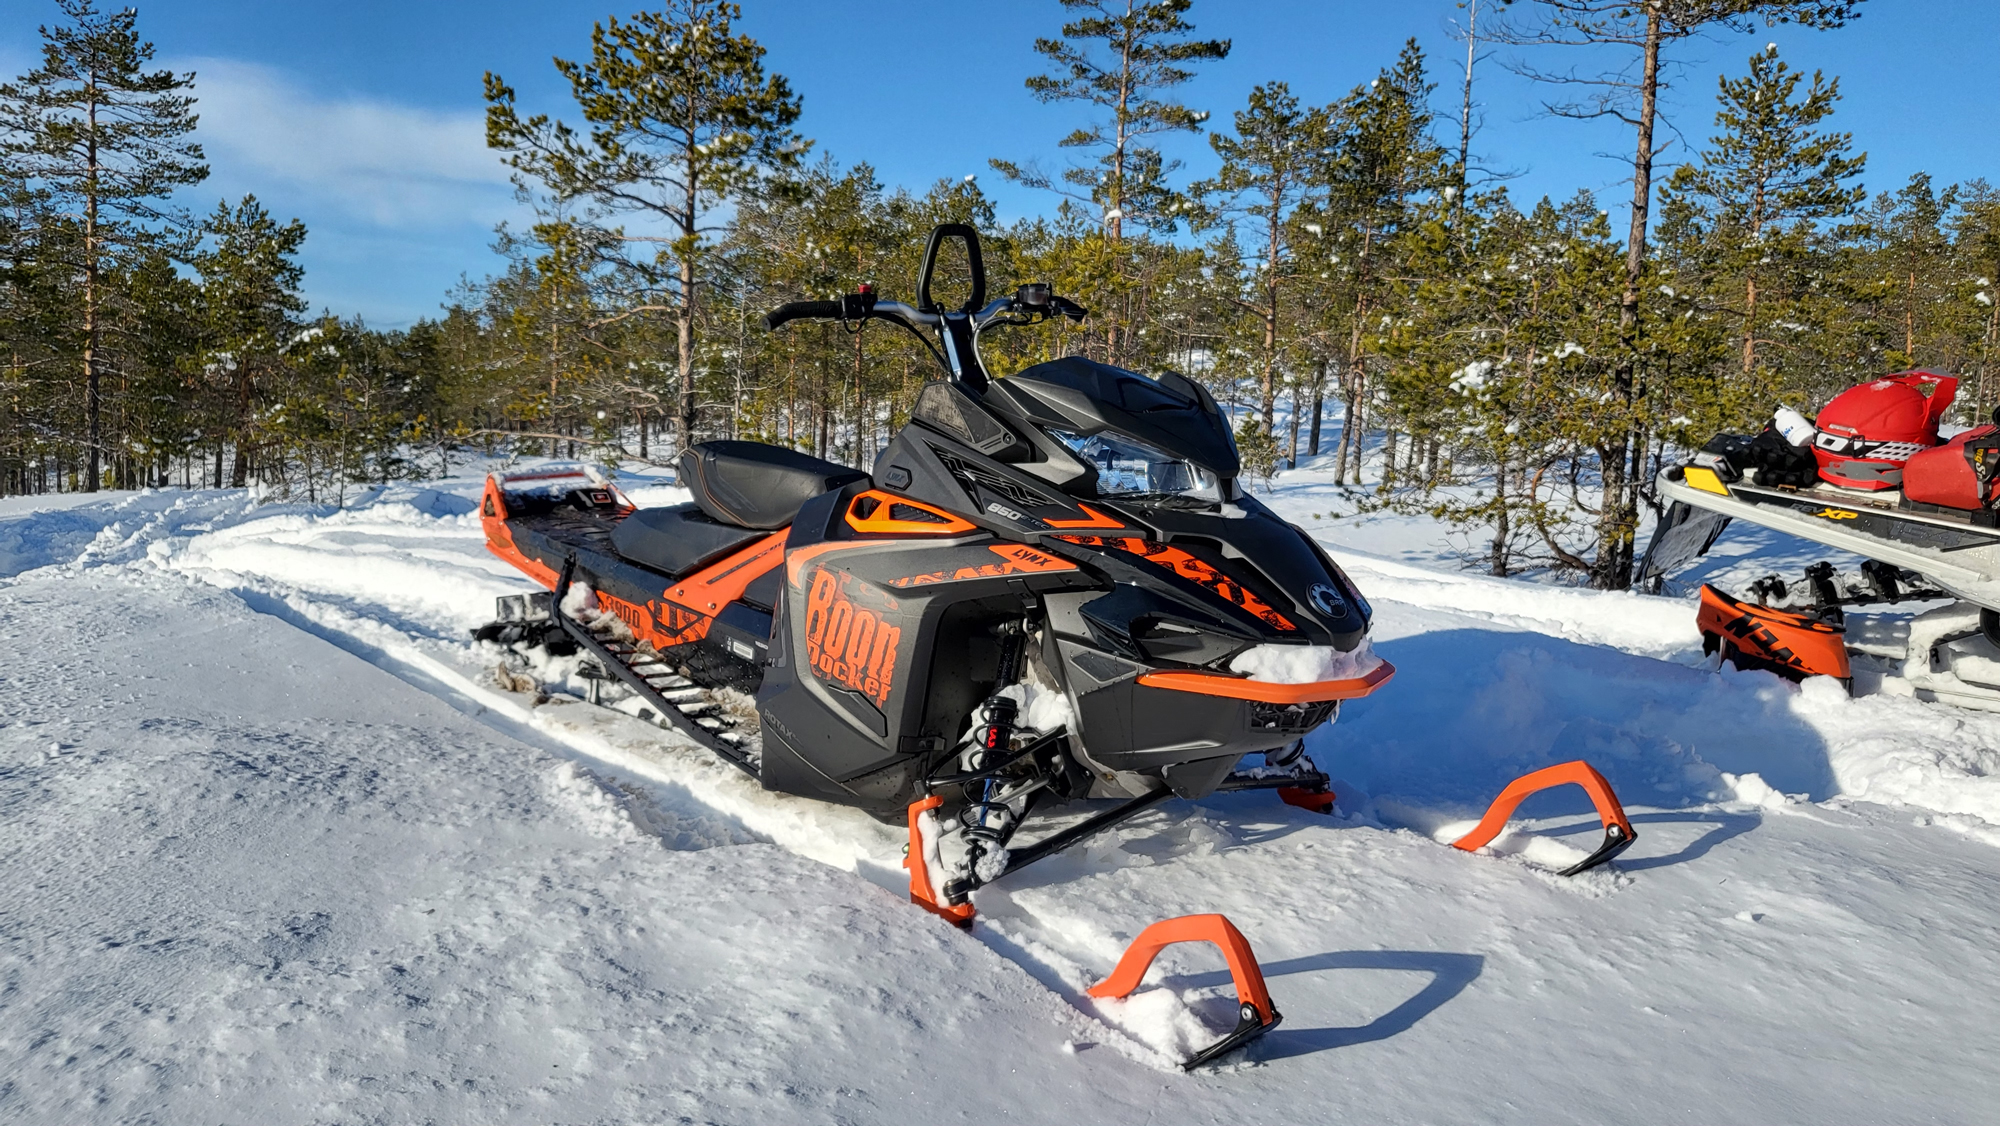 Hyra snöskoter Umeå